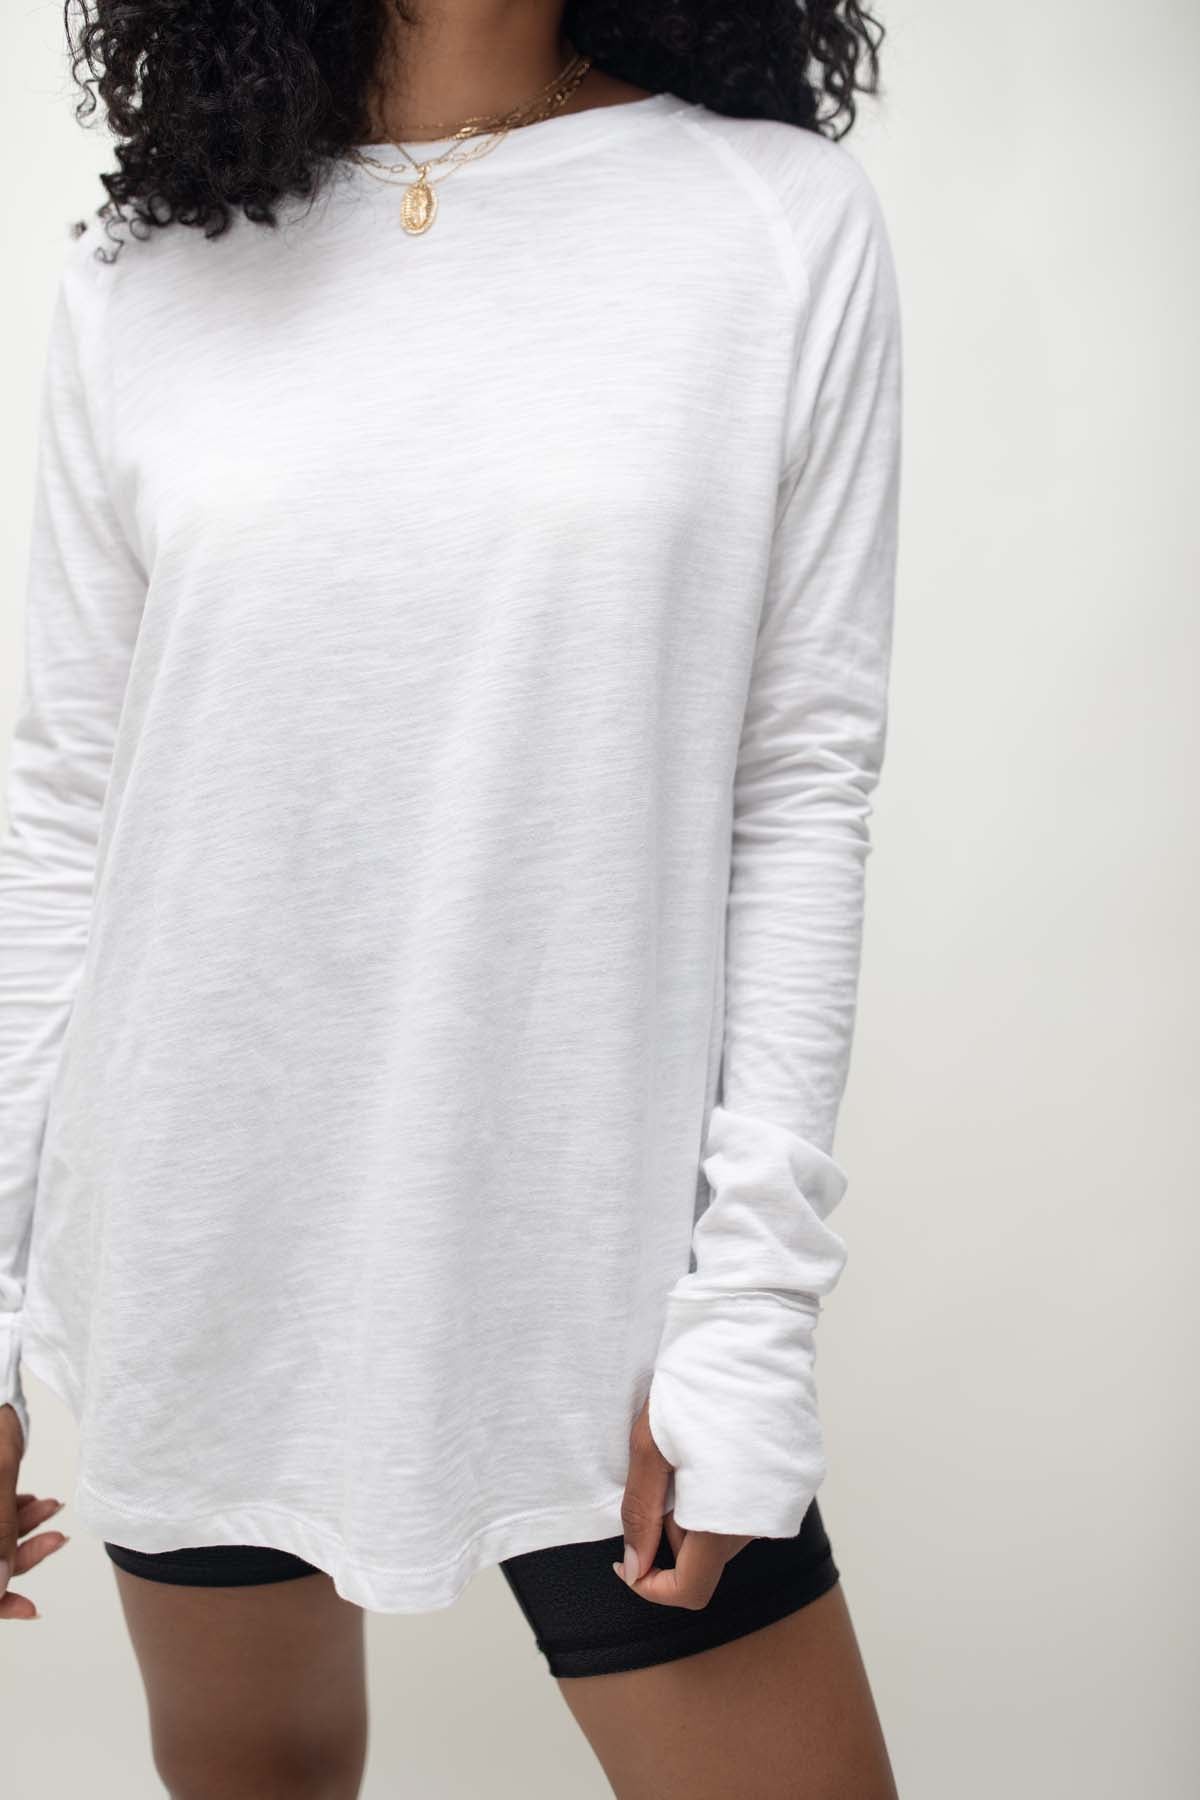 Tina Long Sleeve, alternate, color, White